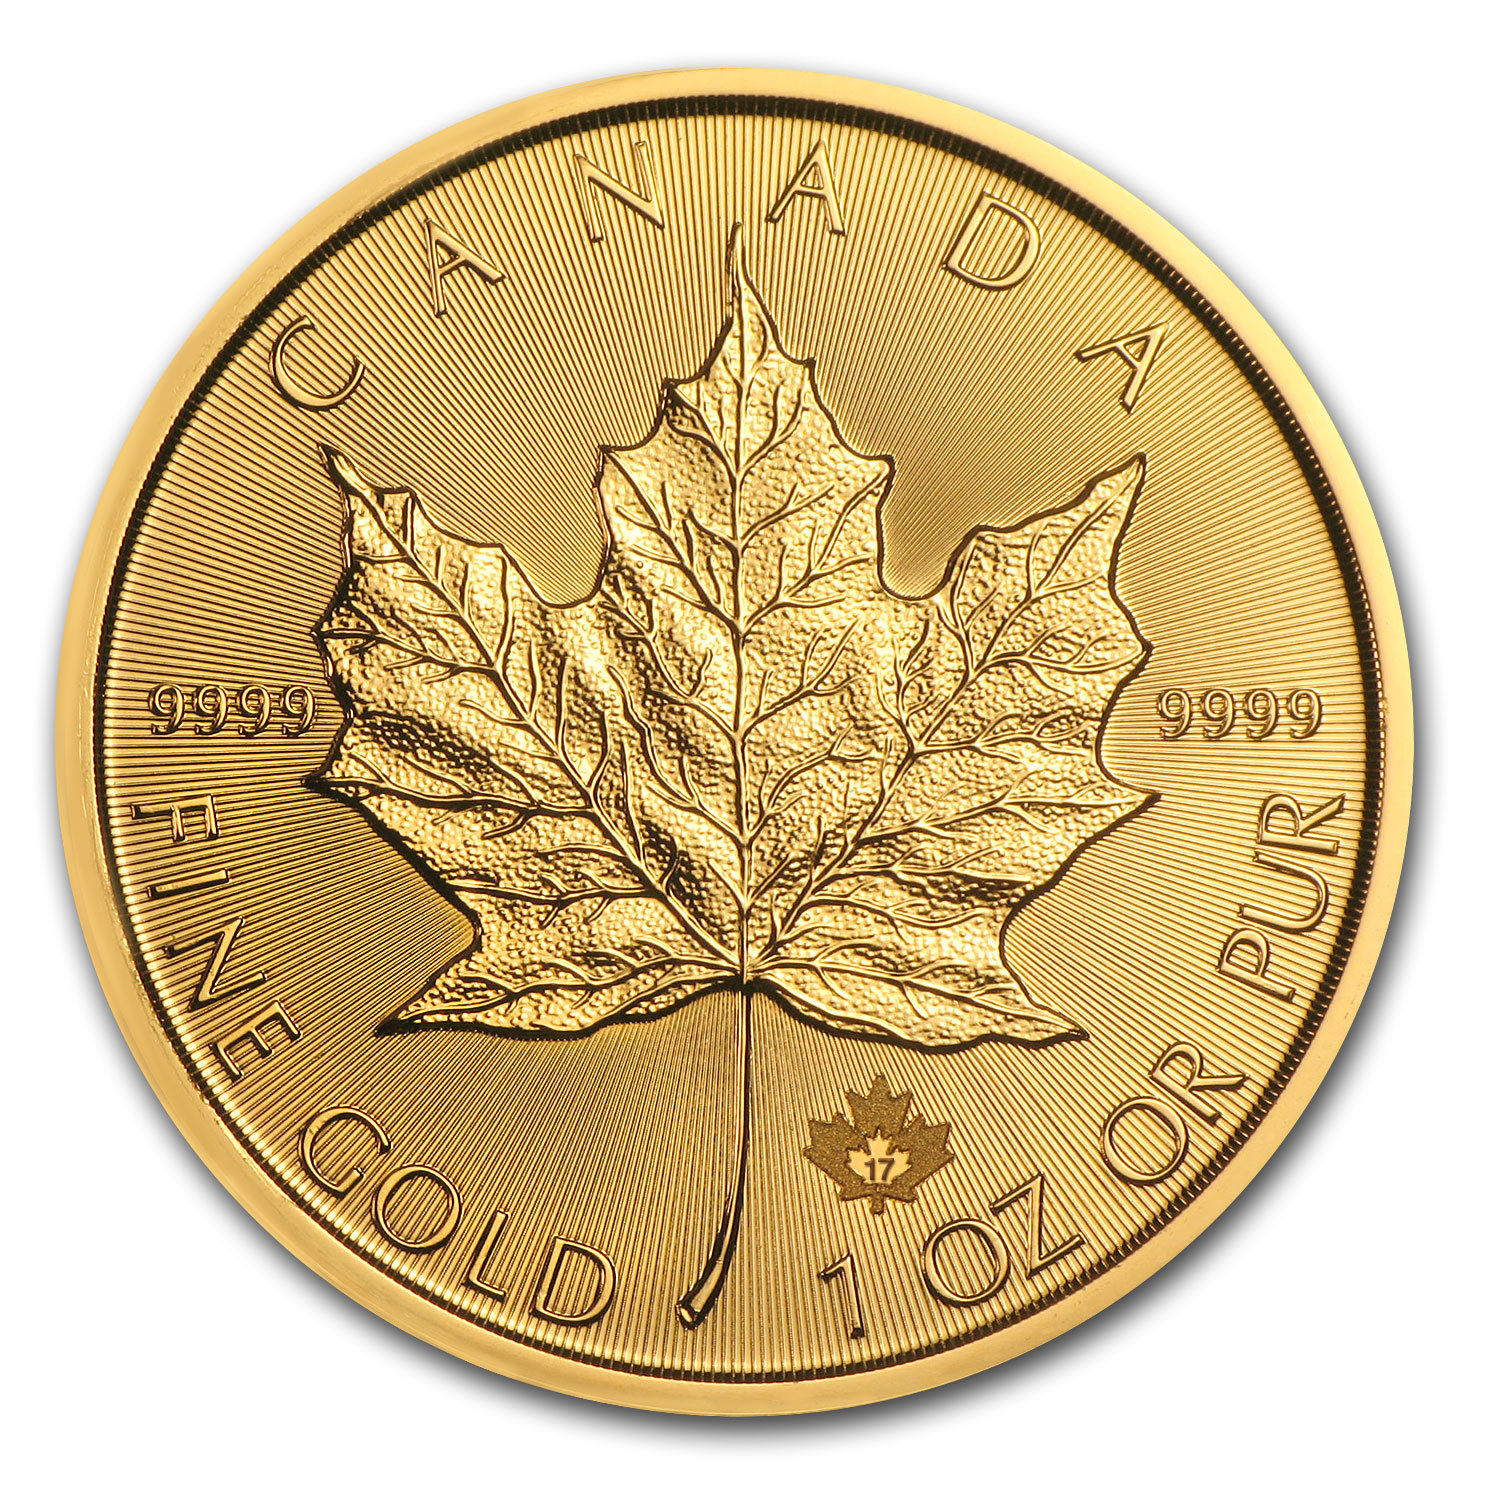 2017 Canada 1 oz Gold Maple Leaf Brilliant Uncirculated Coin - SKU #102768